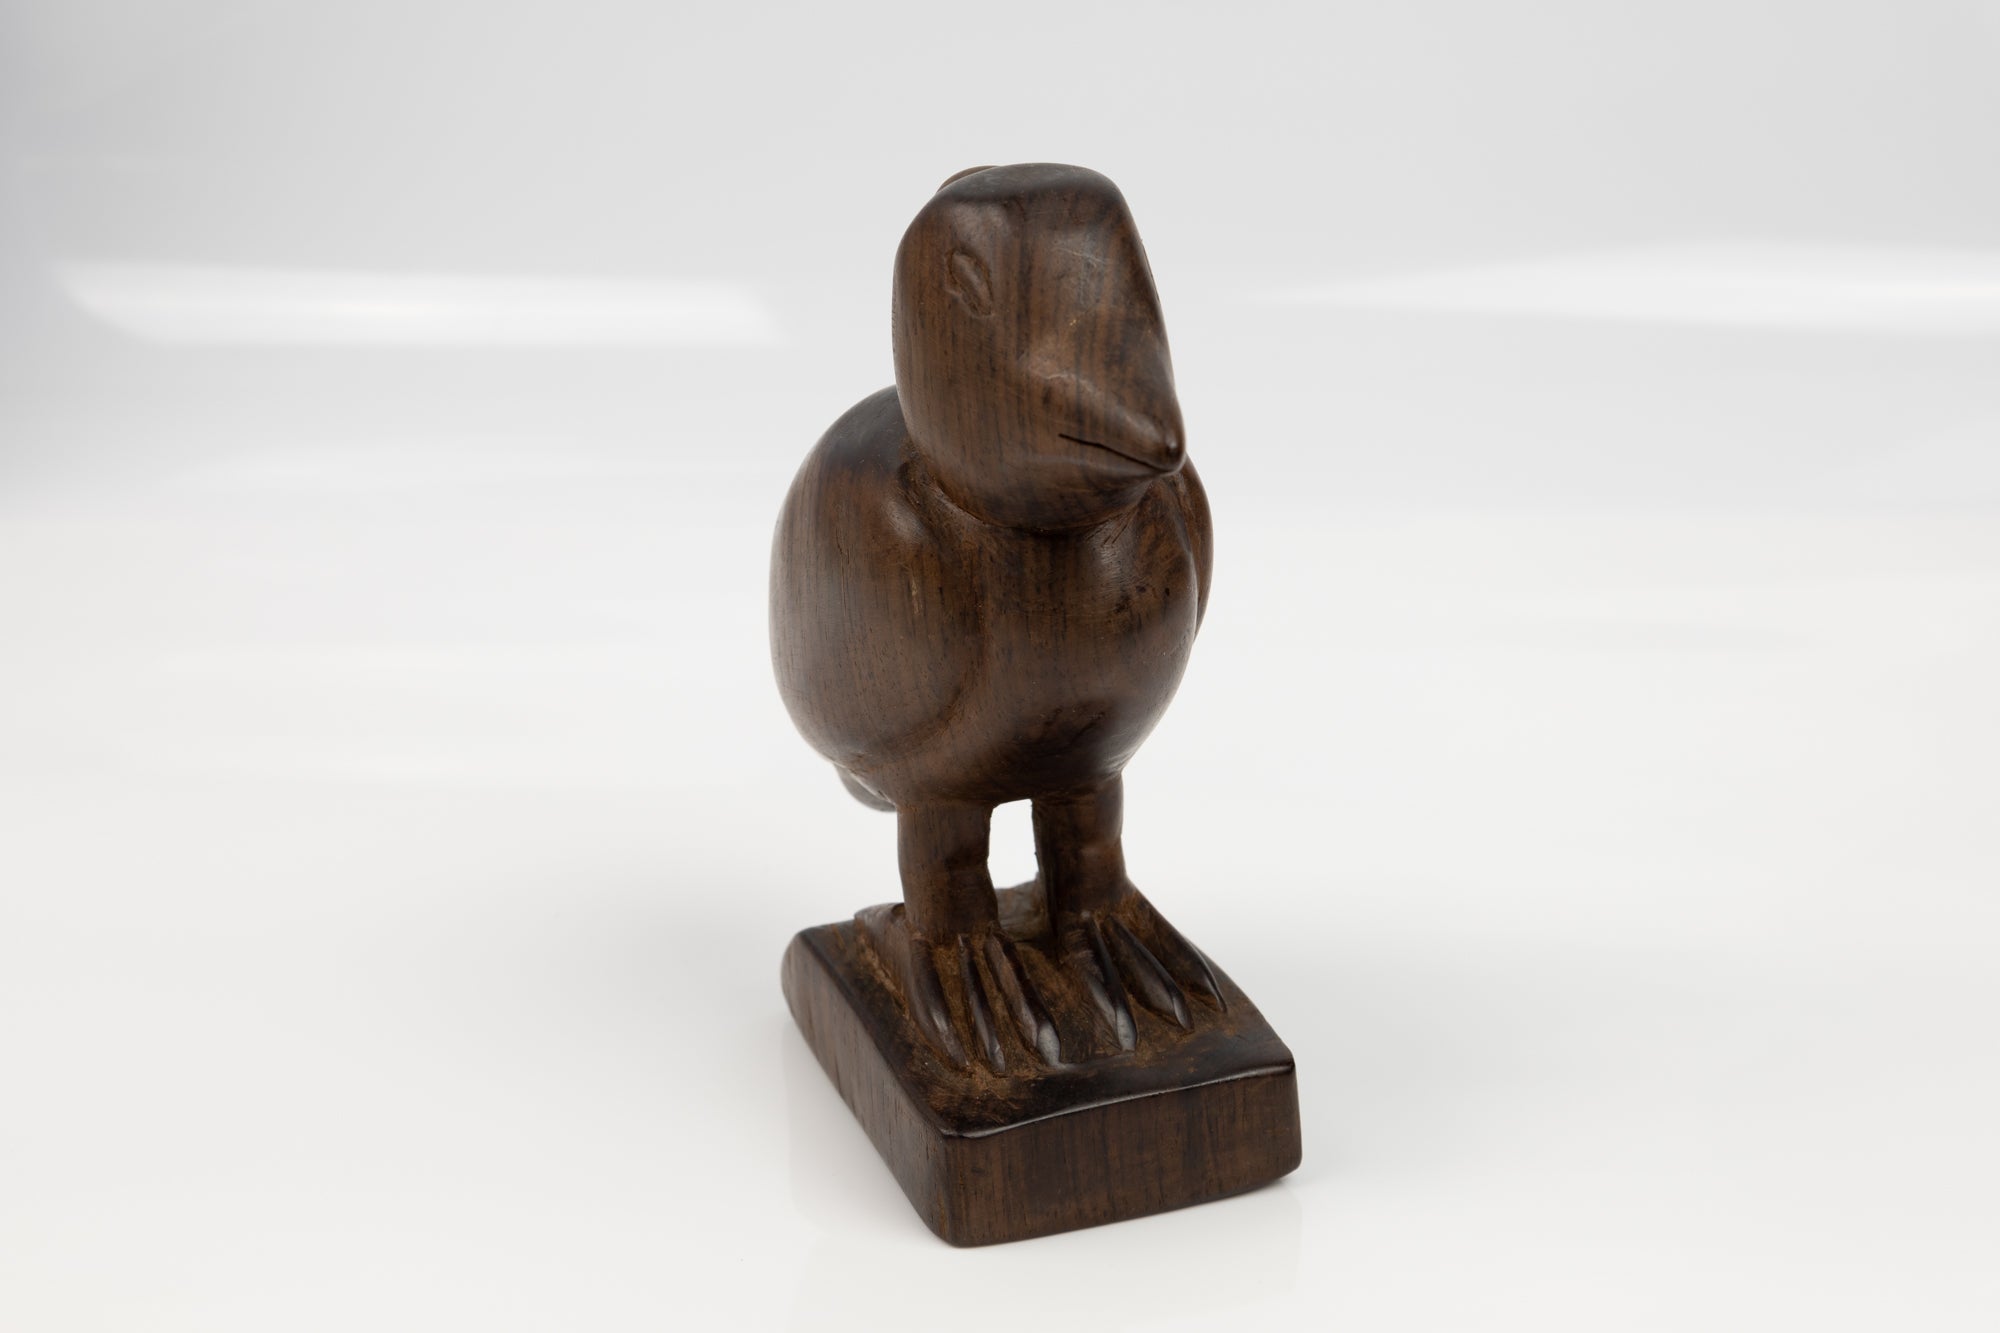 Partiridge Figurine, Wood Carving